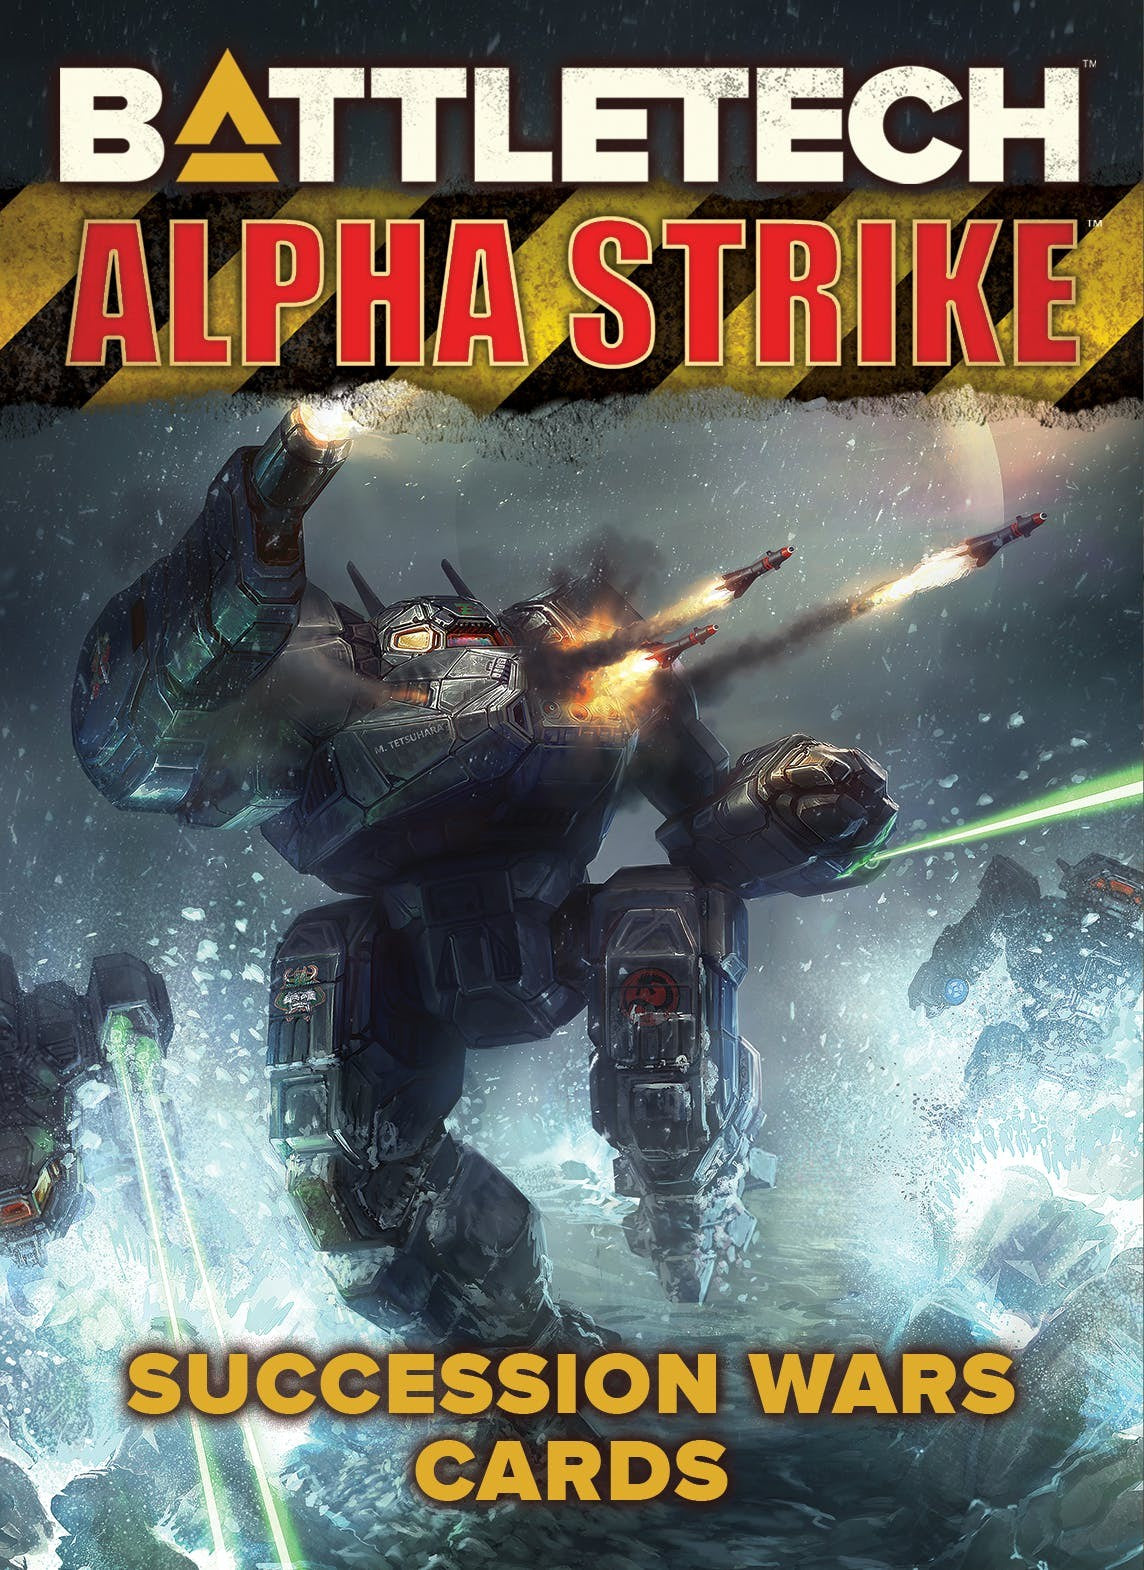 BattleTech Alpha Strike Succession Wars Cards